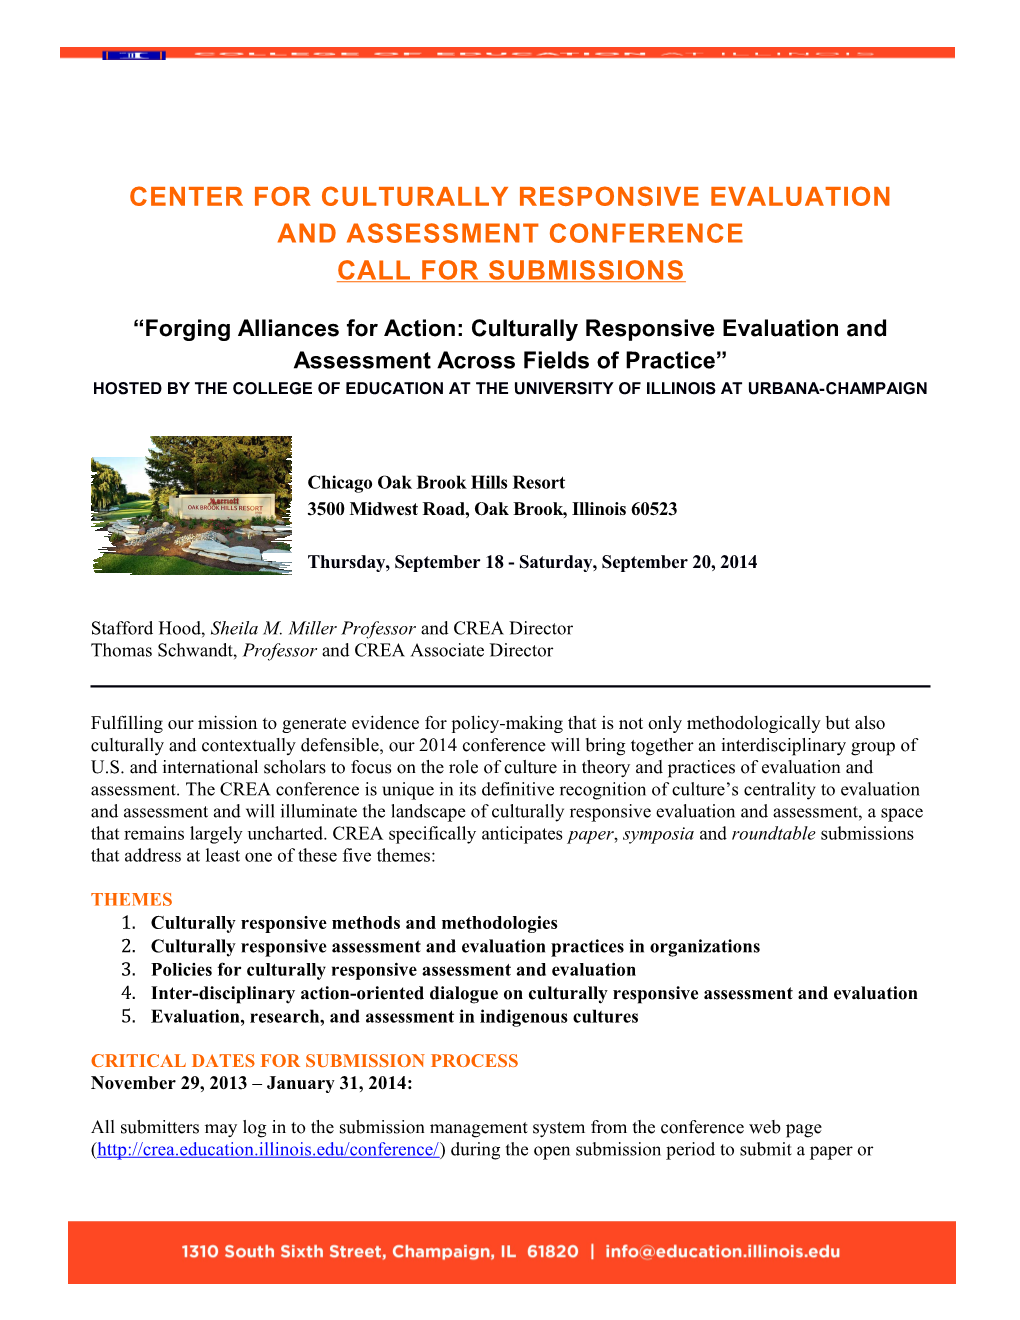 Center for Culturally Responsive Evaluation